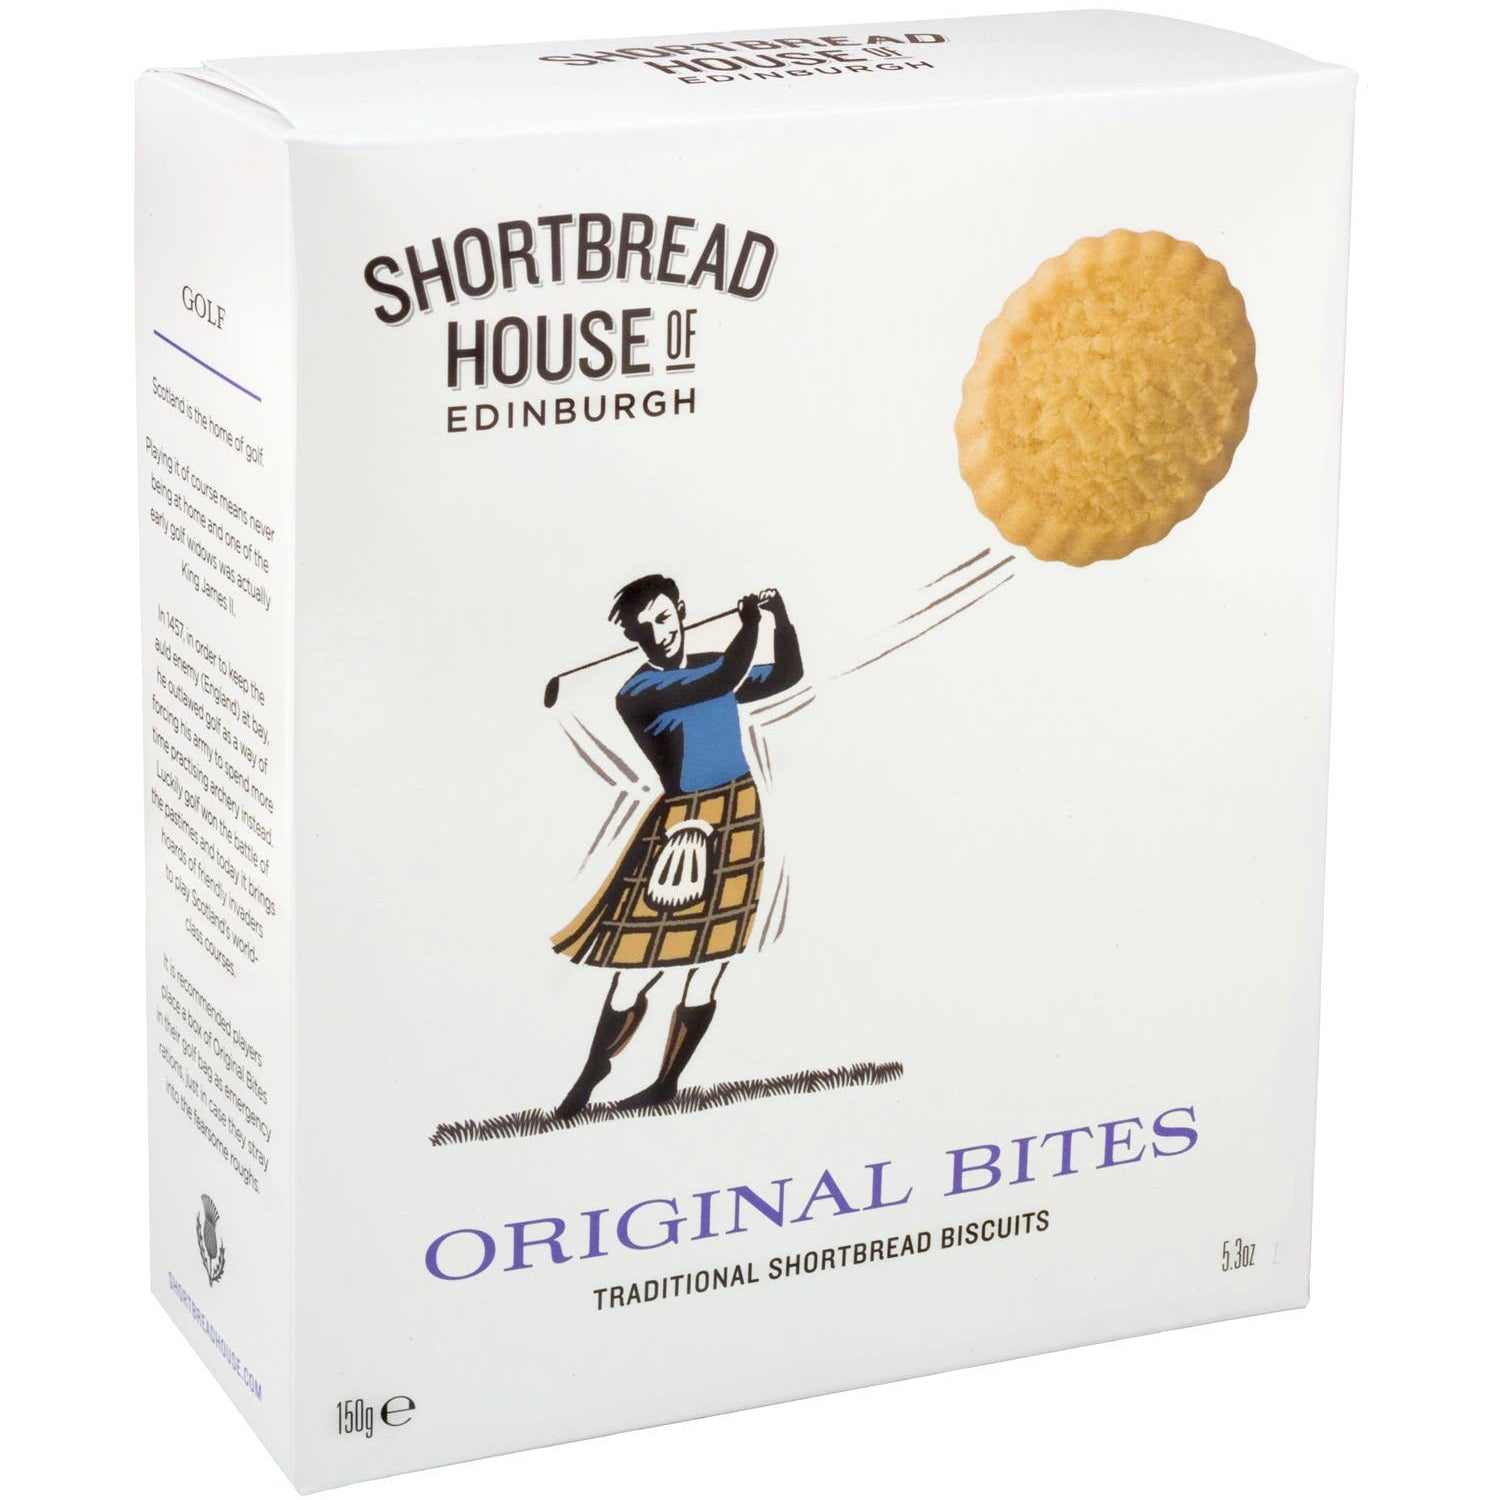 Shortbread House of Edinburgh All Butter Original Bites